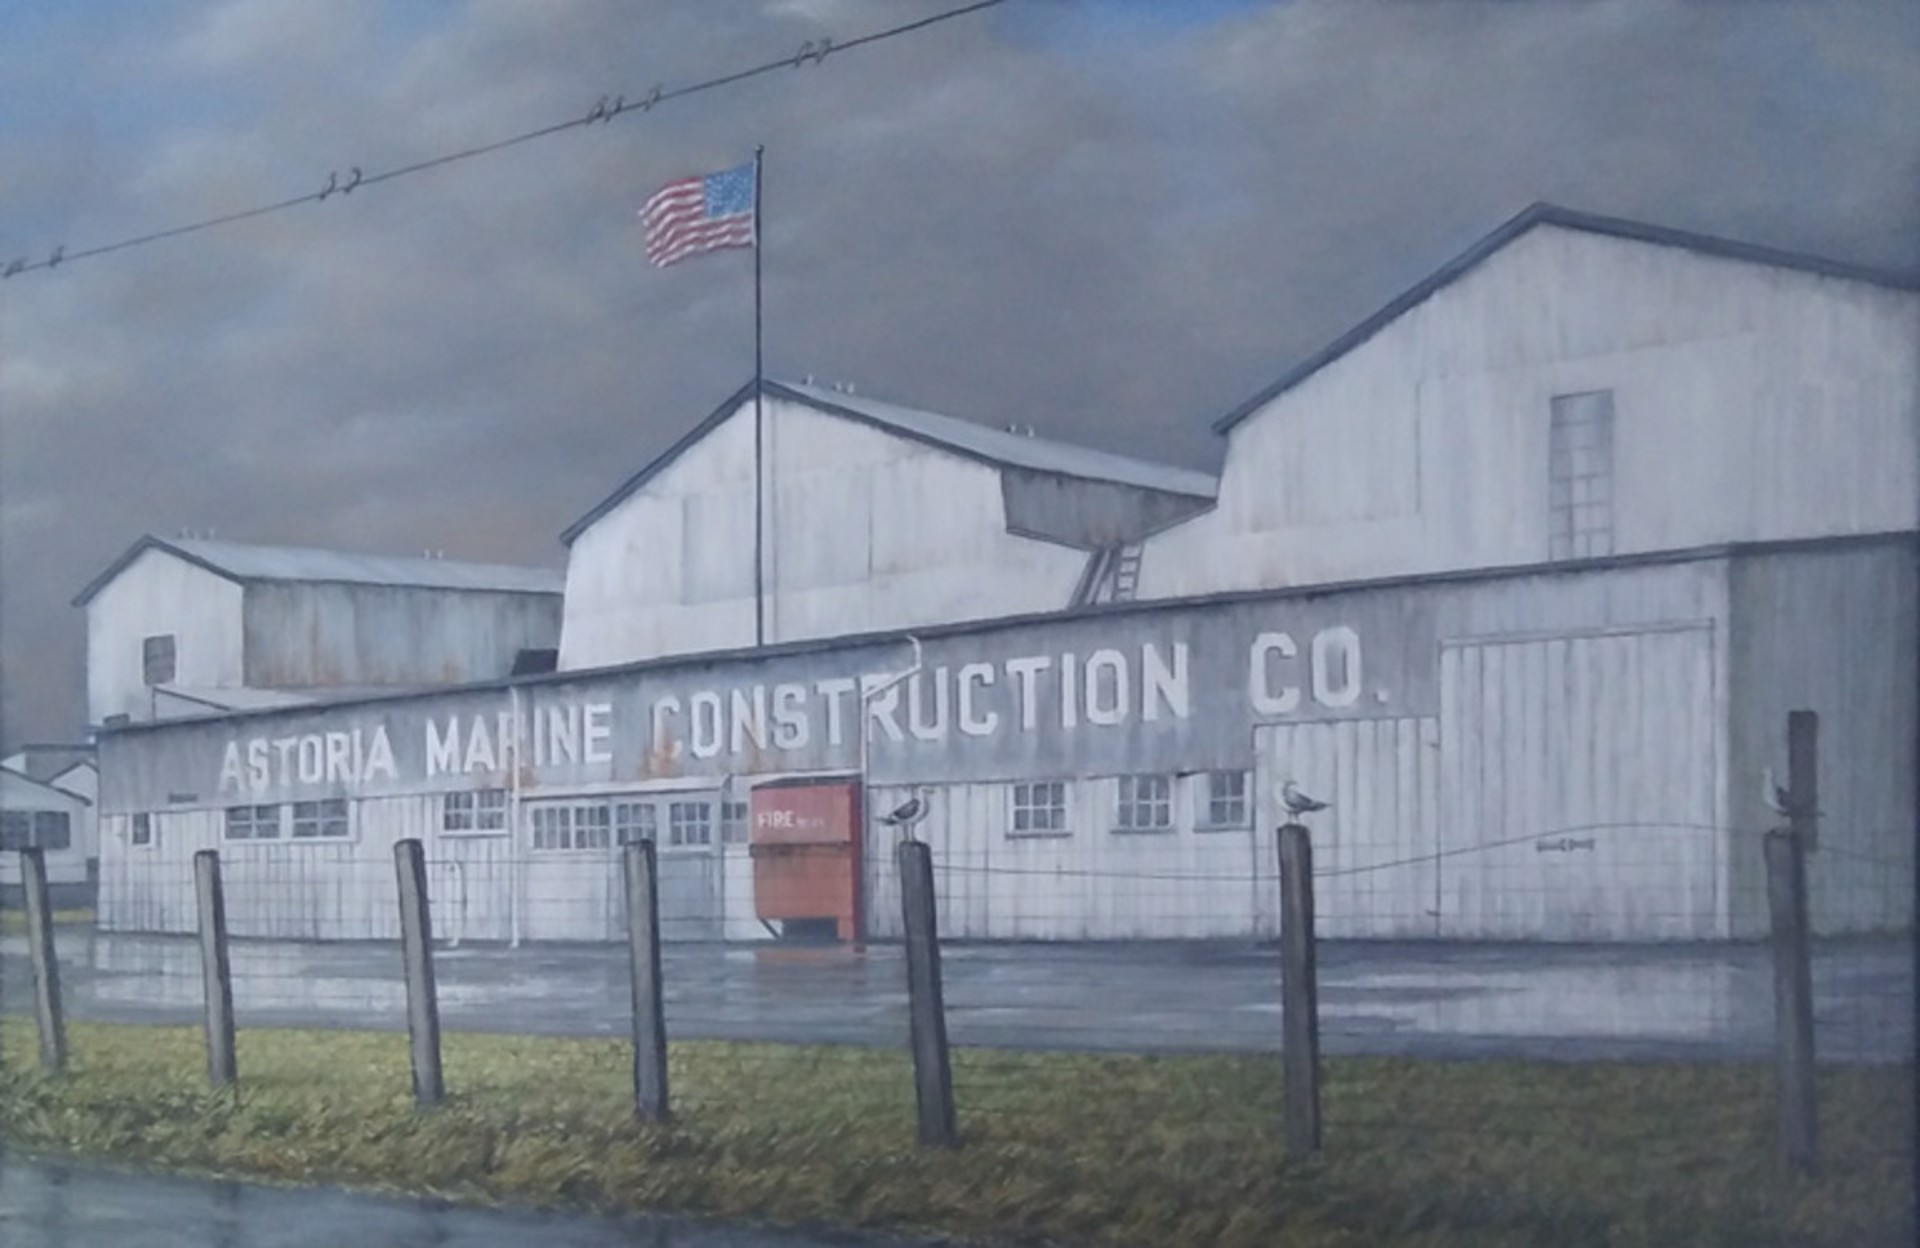 Astoria Marine Construction Co. by Roger McKay